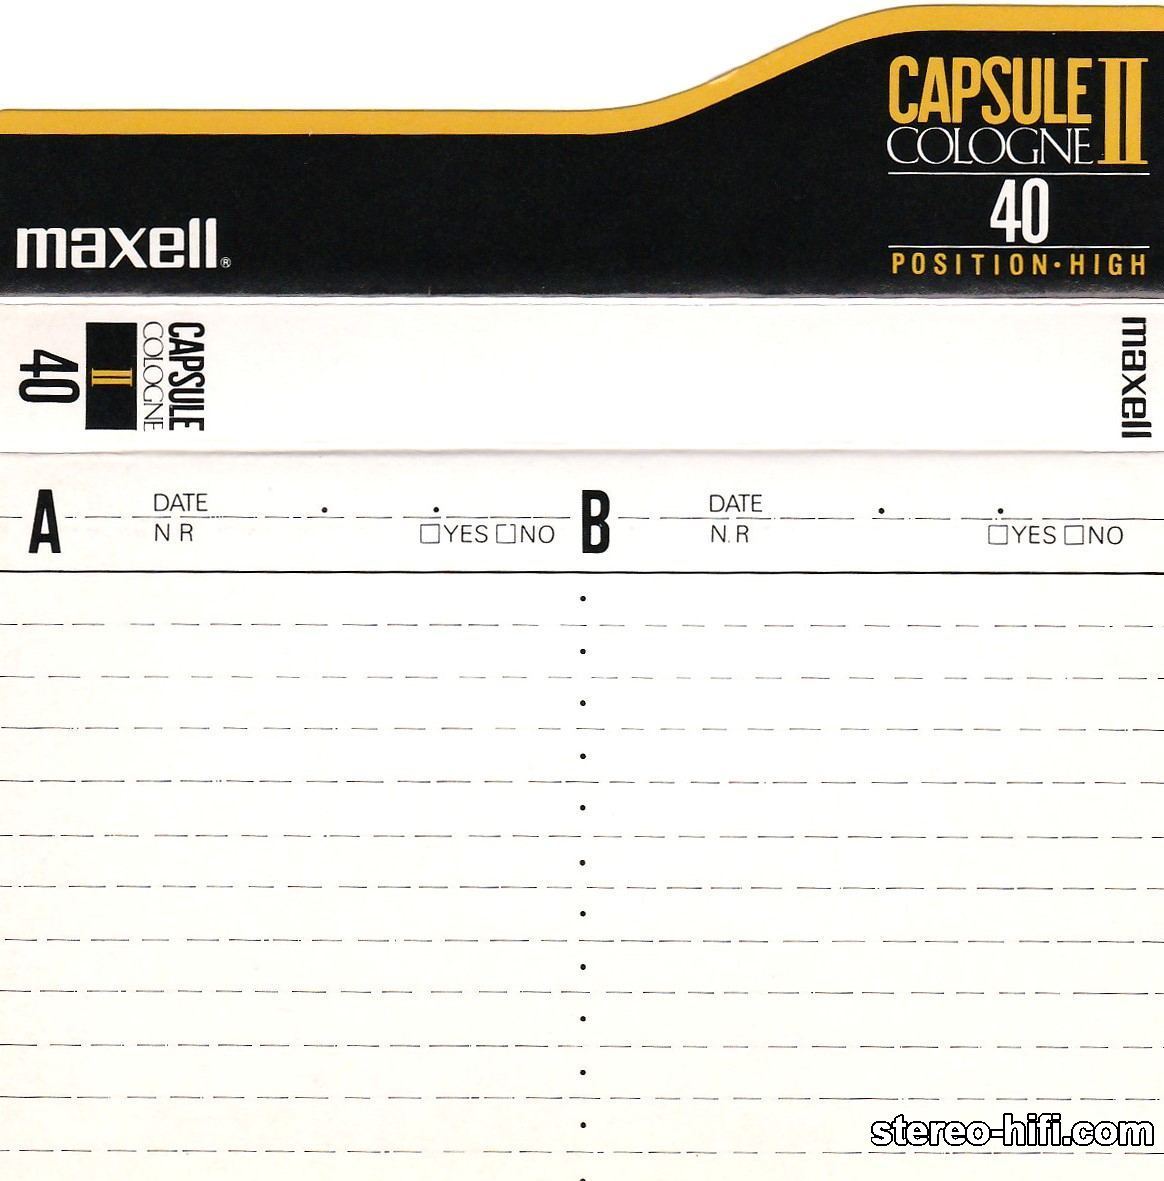 Maxell Capsule Cologne II C40 1990 JP